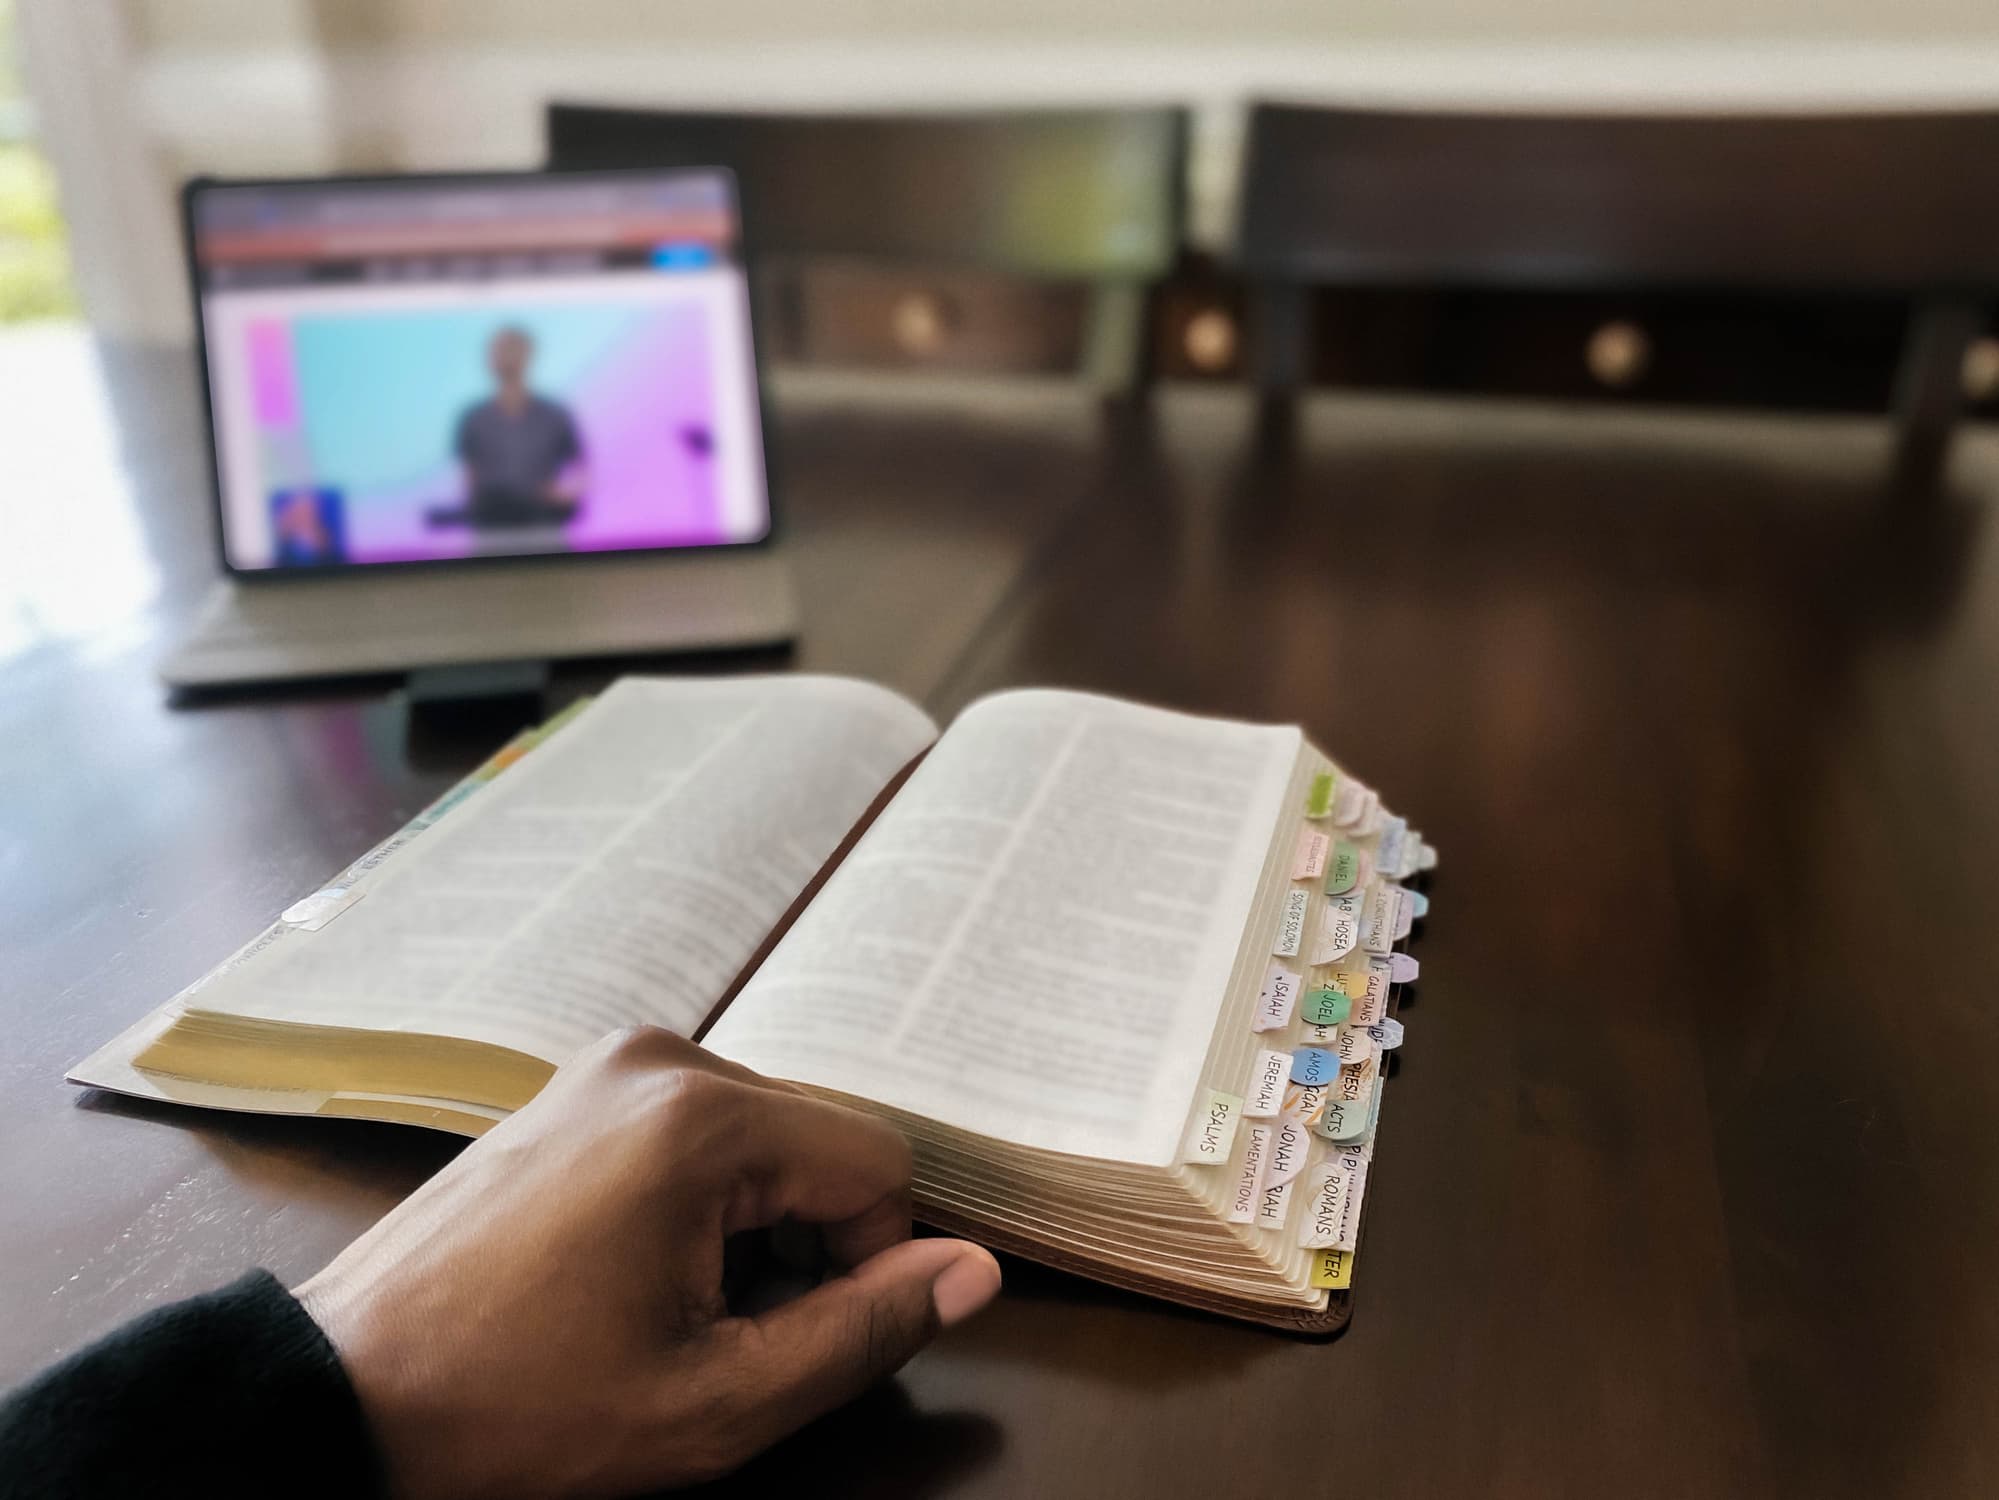 pentecostal bible college online portal